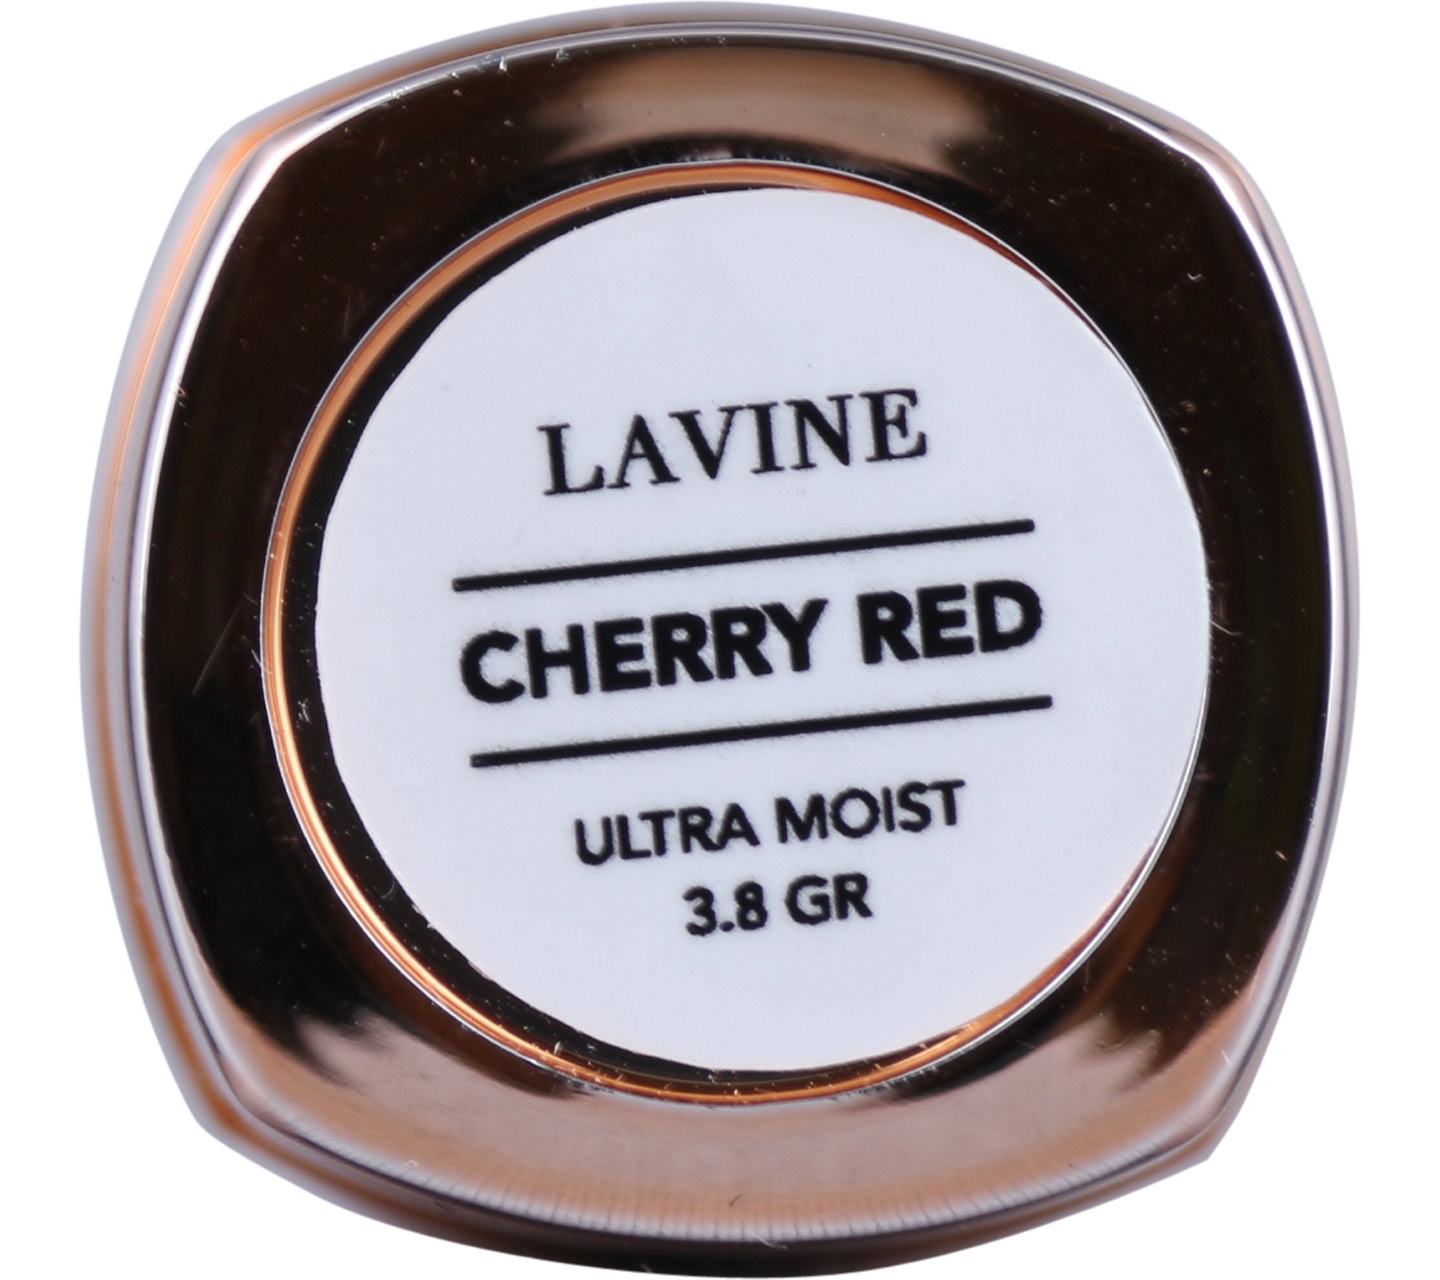 Lavine Cherry Red Lips